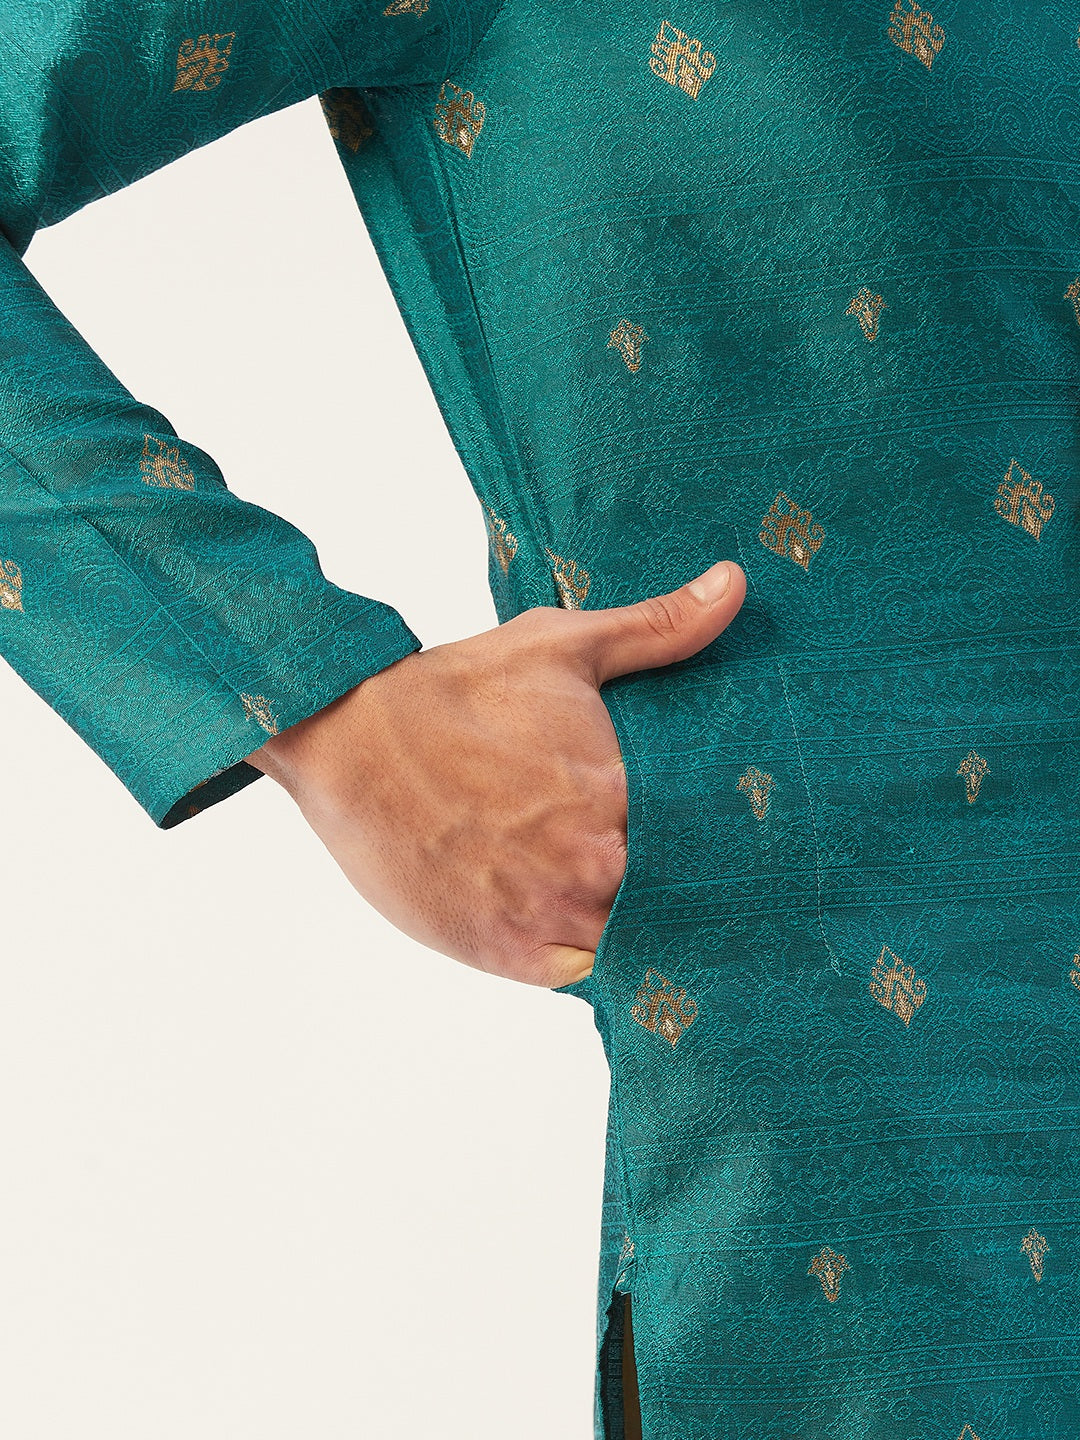 Men's Teal Coller Embroidered Woven Design Kurta Pyjama ( JOKP 649 Teal ) - Virat Fashions